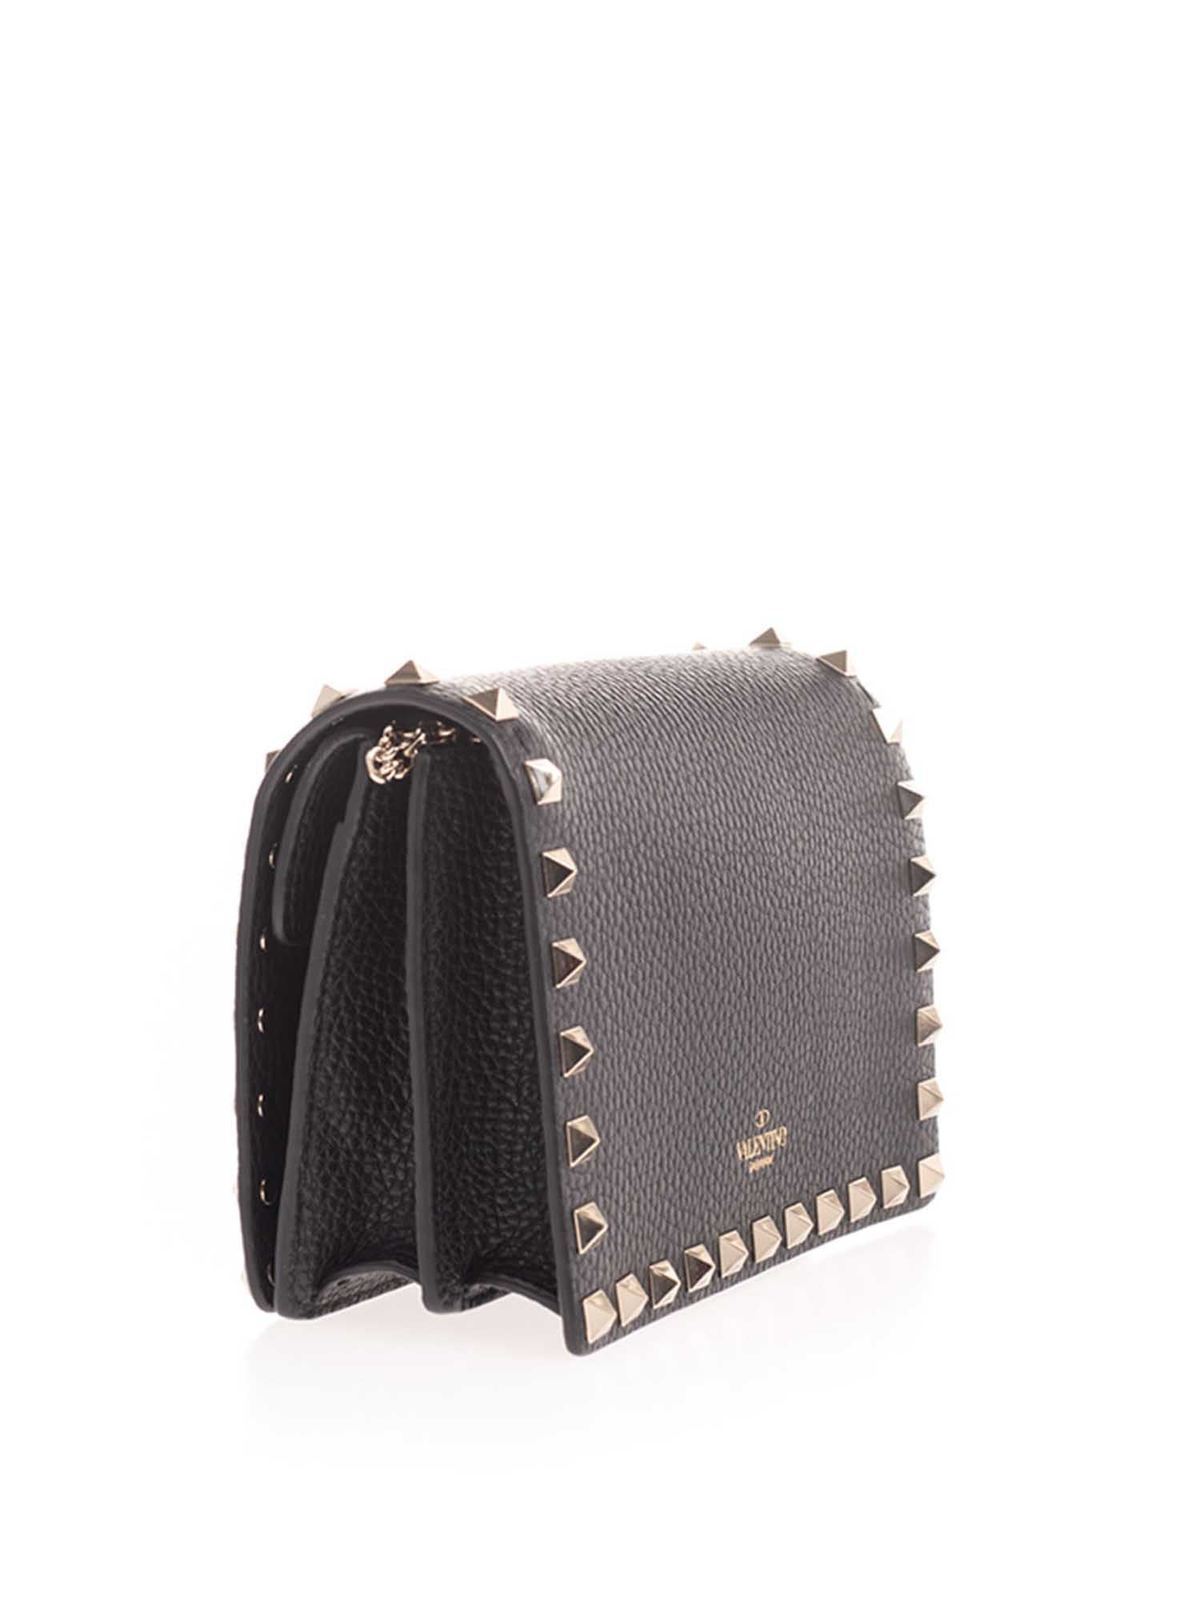 Valentino Garavani Rockstud Small Leather Clutch Bag